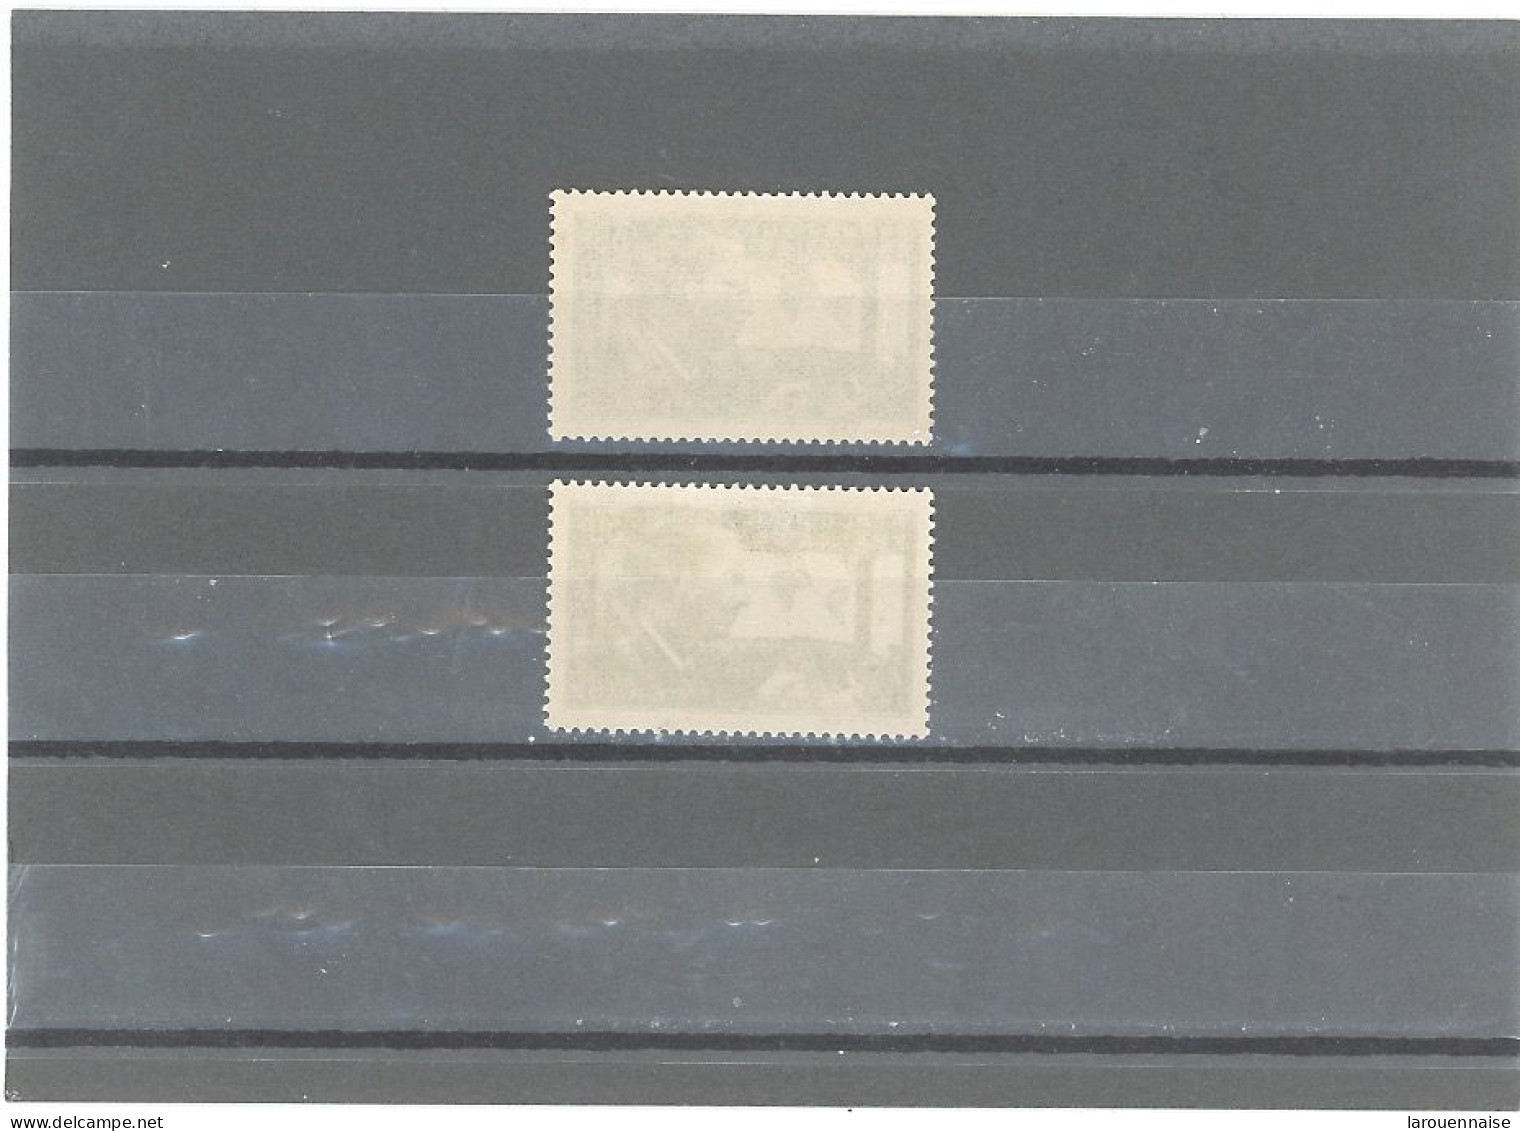 VARIÉTÉS -N°337 N**- MERMOZ - 30c - NUANCE VERT NOIR (Cérès 337 A) - Unused Stamps